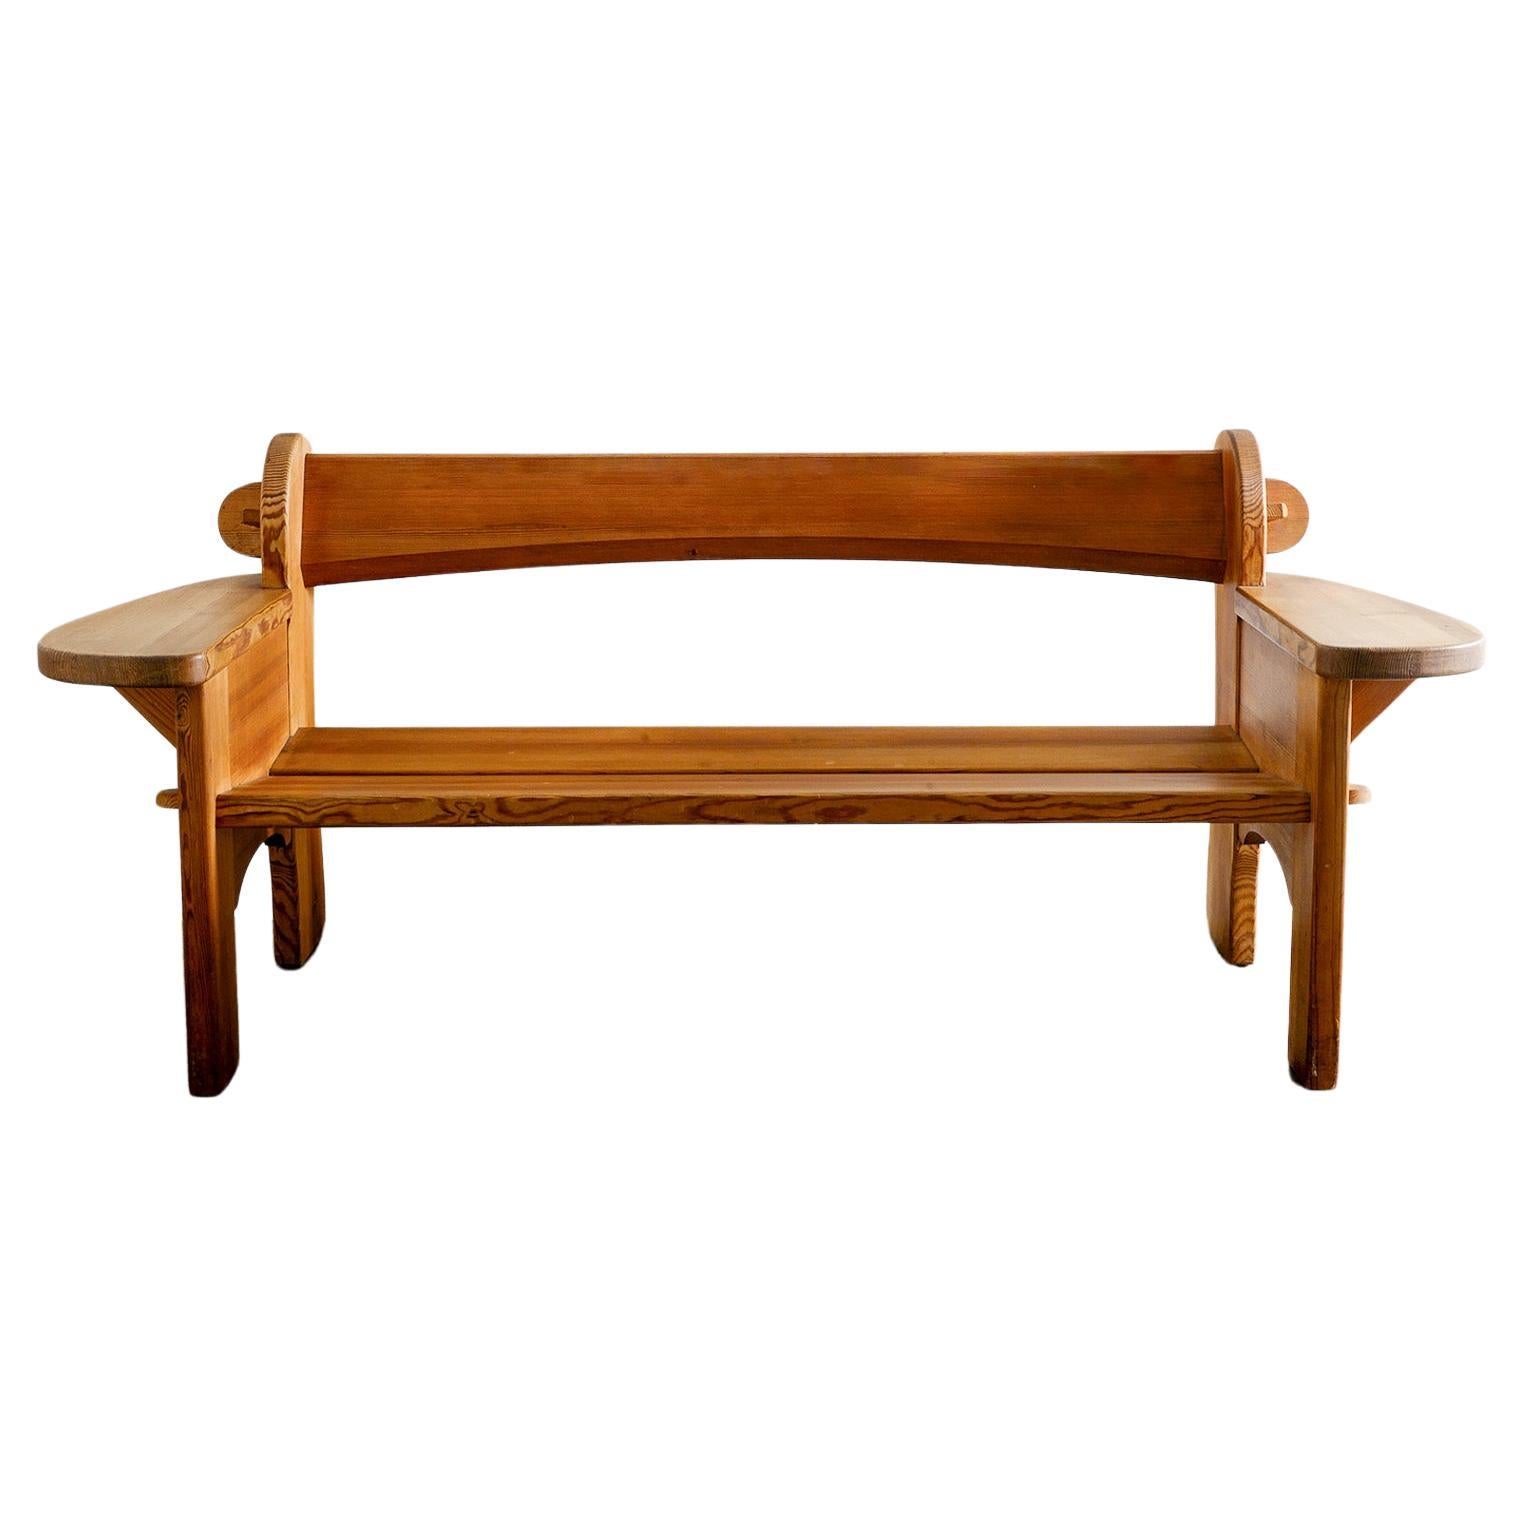 David Rosén "Berga" Sofa in Solid Stained Pine by Nordiska Kompaniet, 1940s For Sale